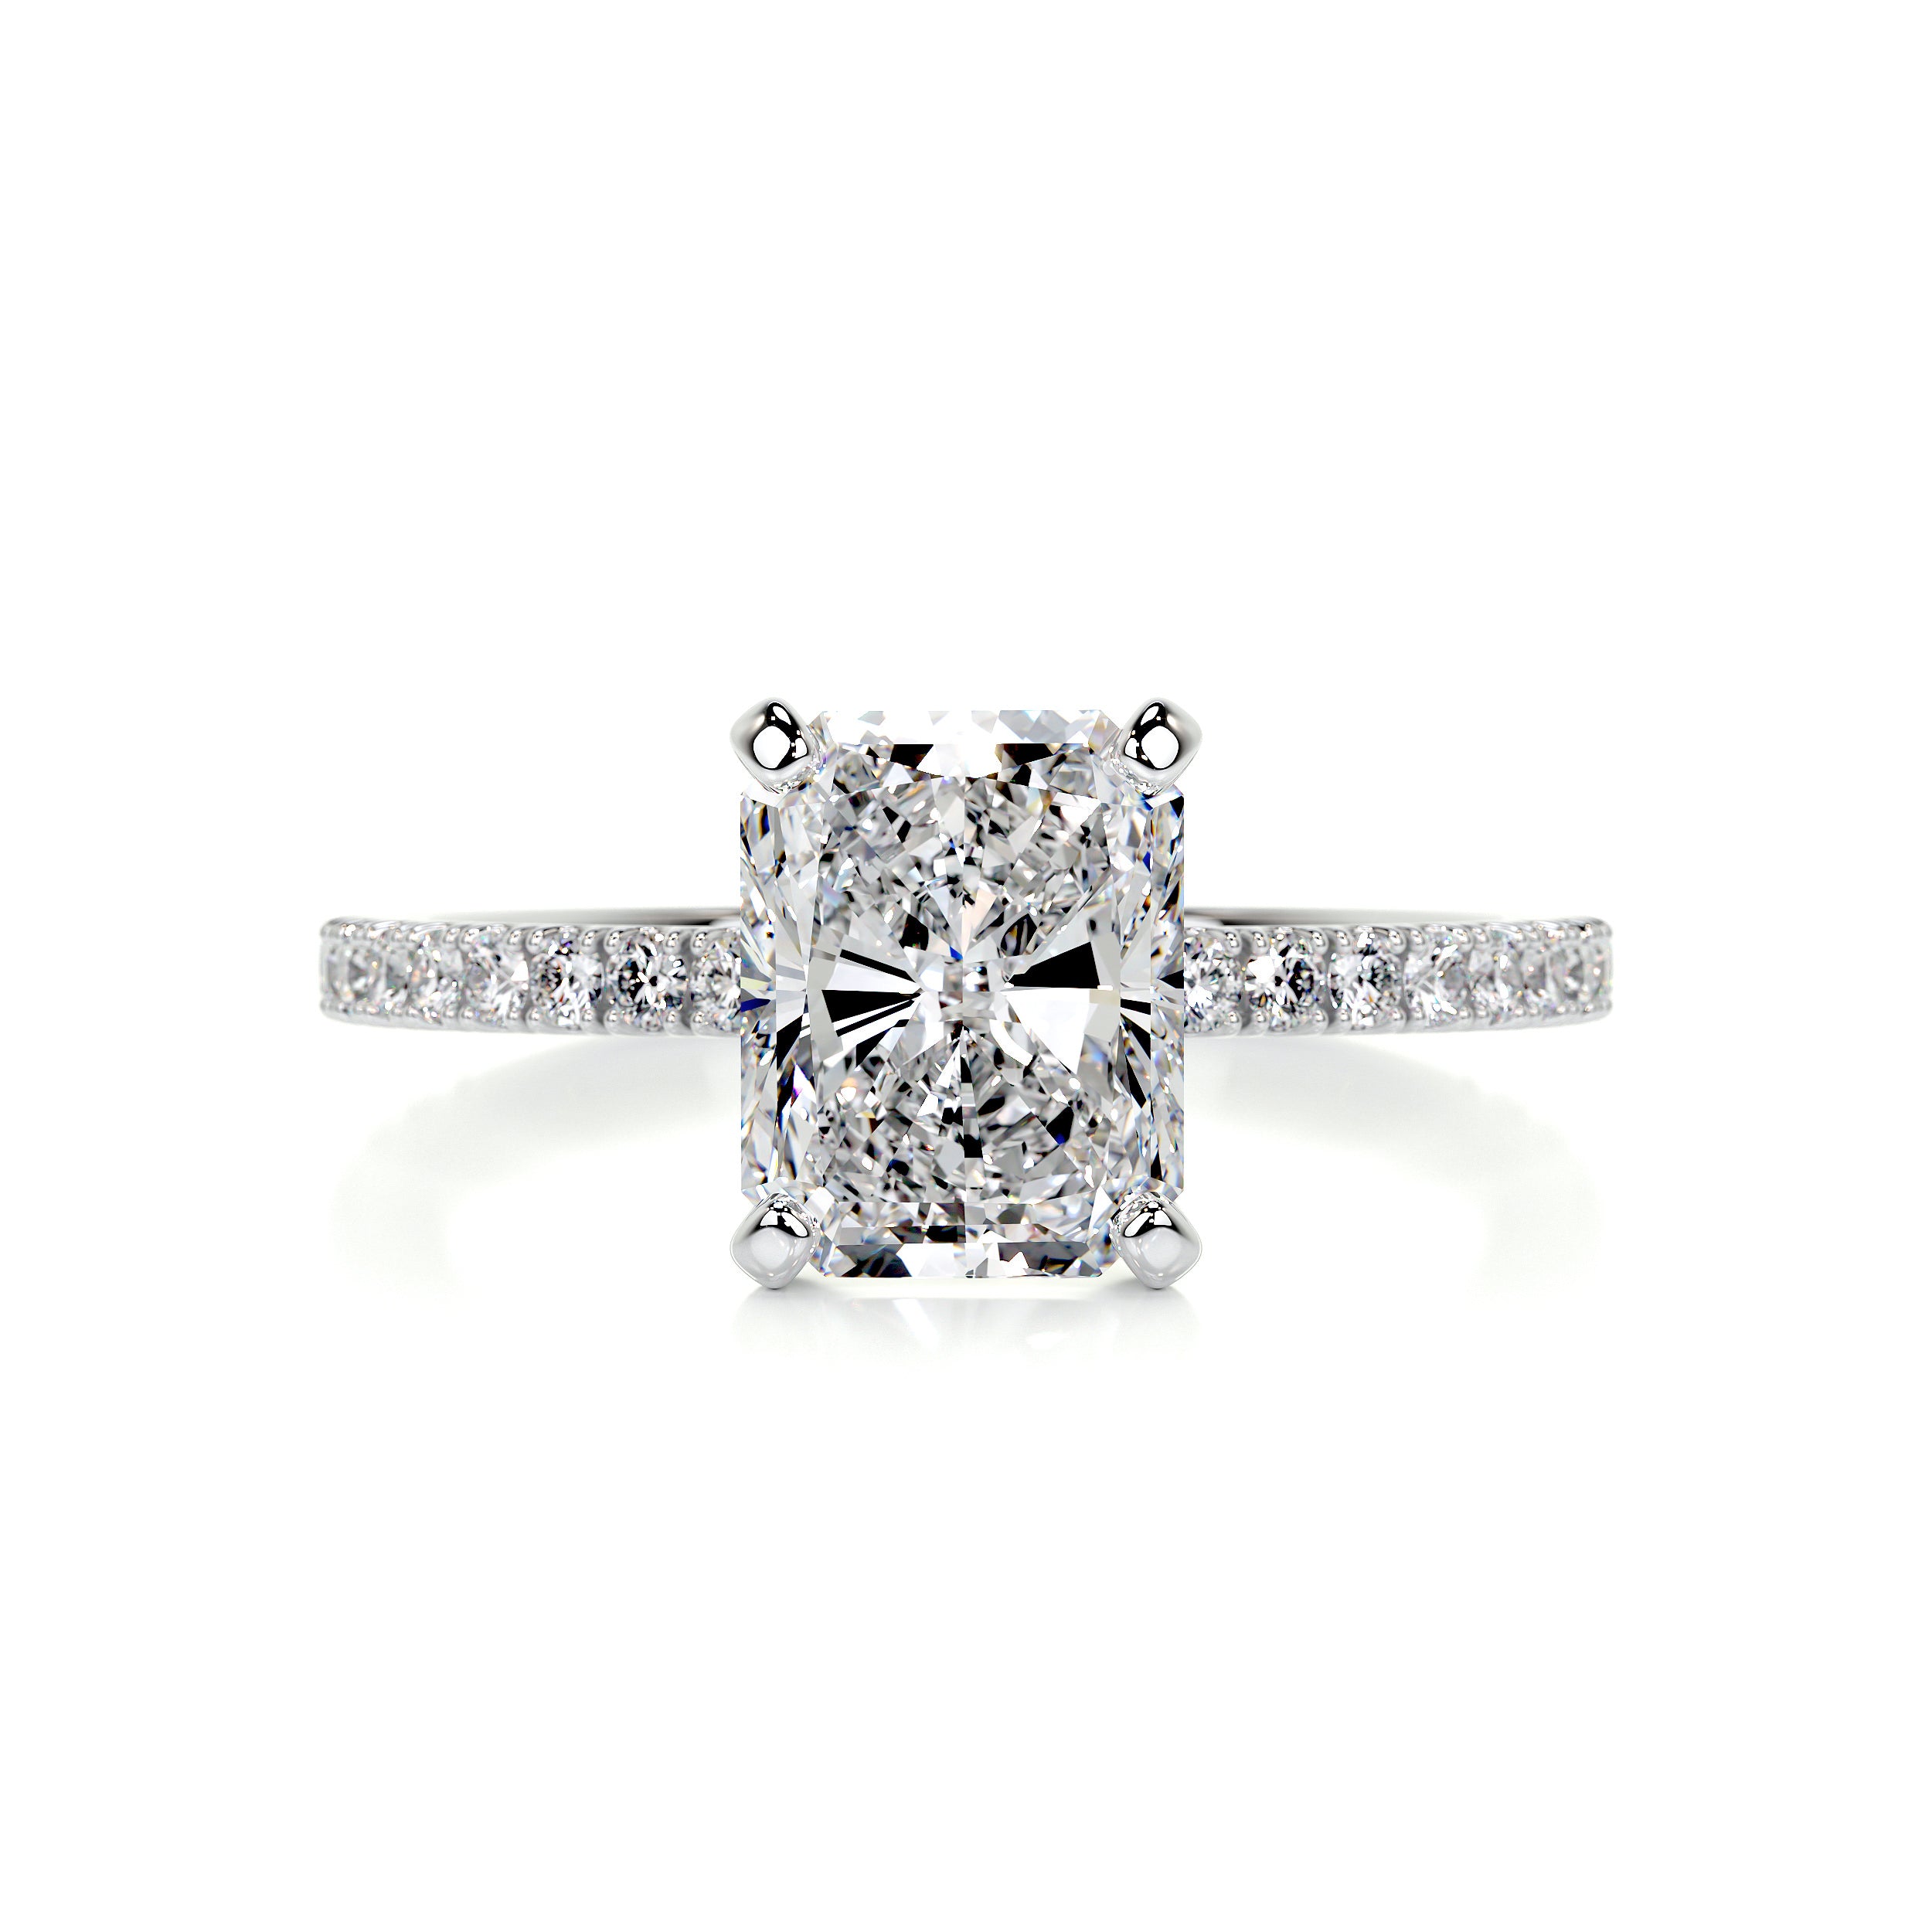 Audrey Diamond Engagement Ring   (2.3 Carat) -Platinum